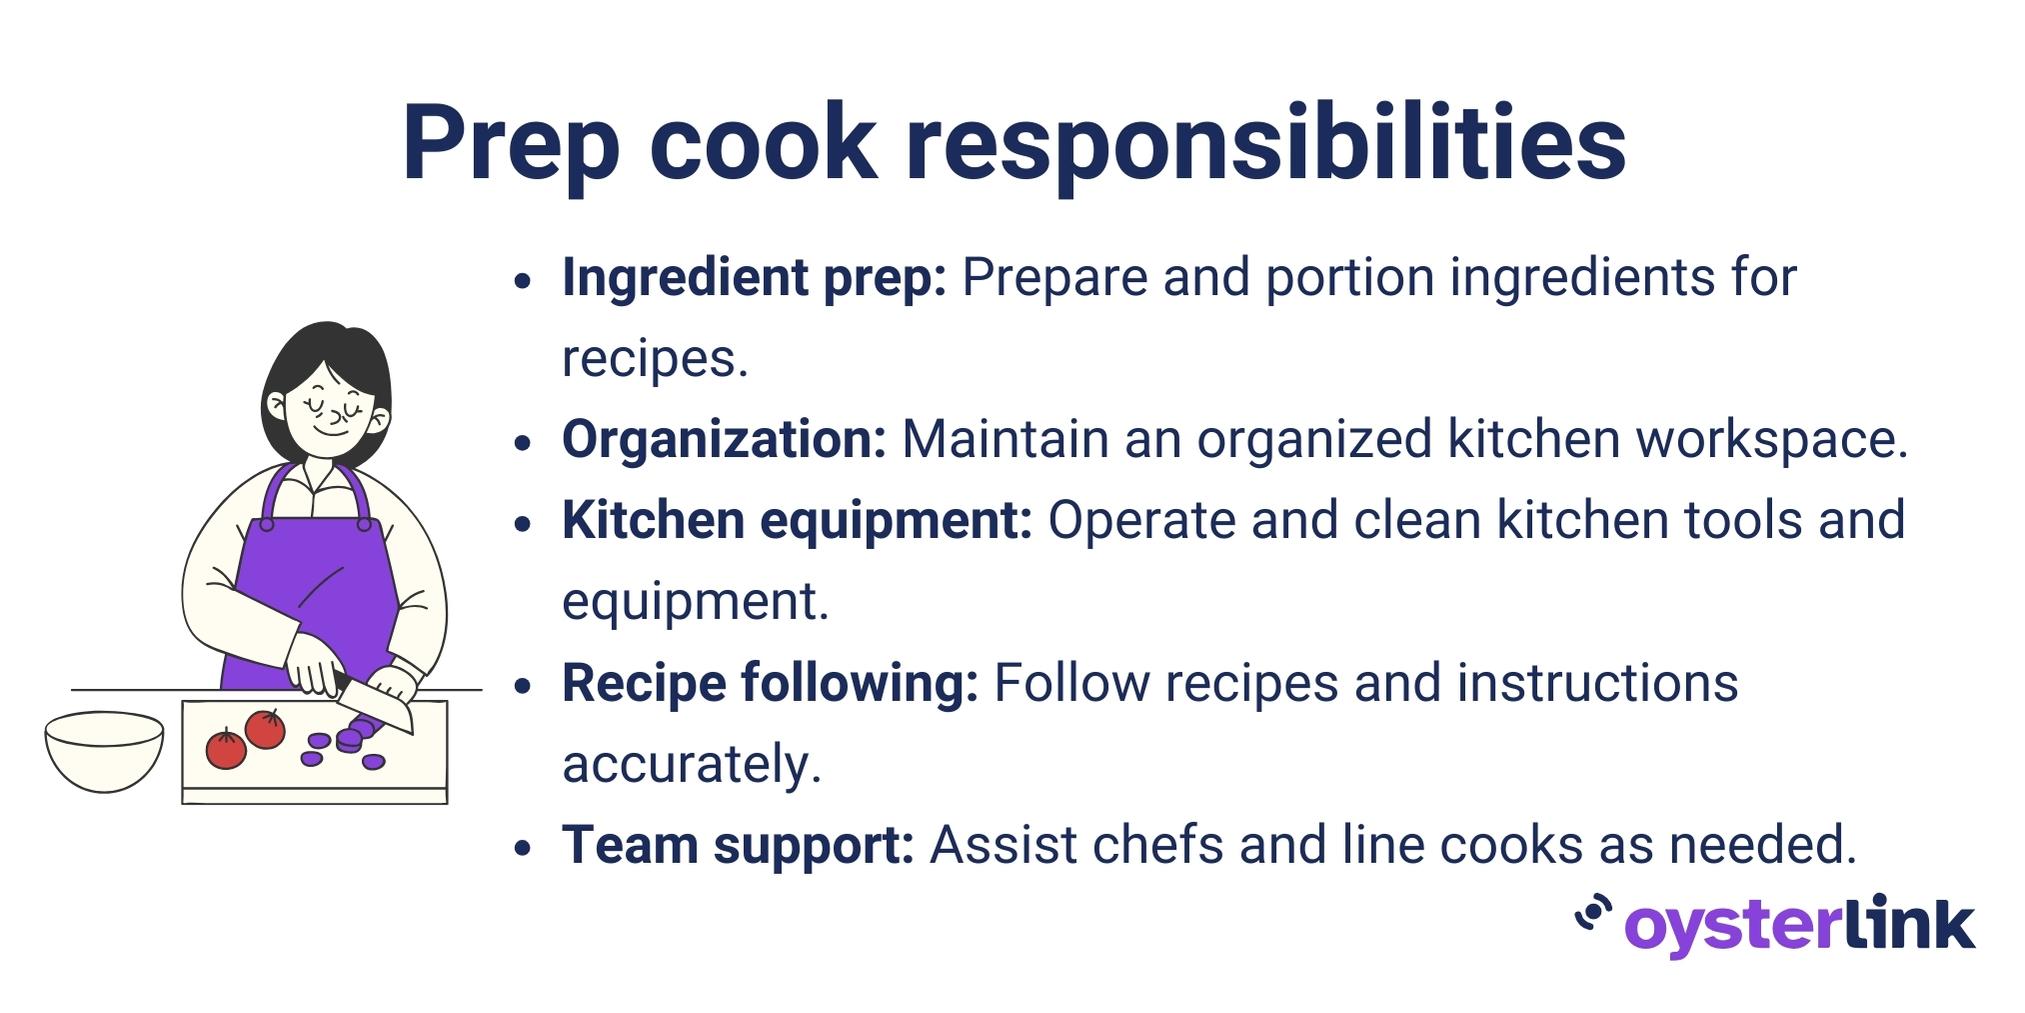 Prep cook responsibilities